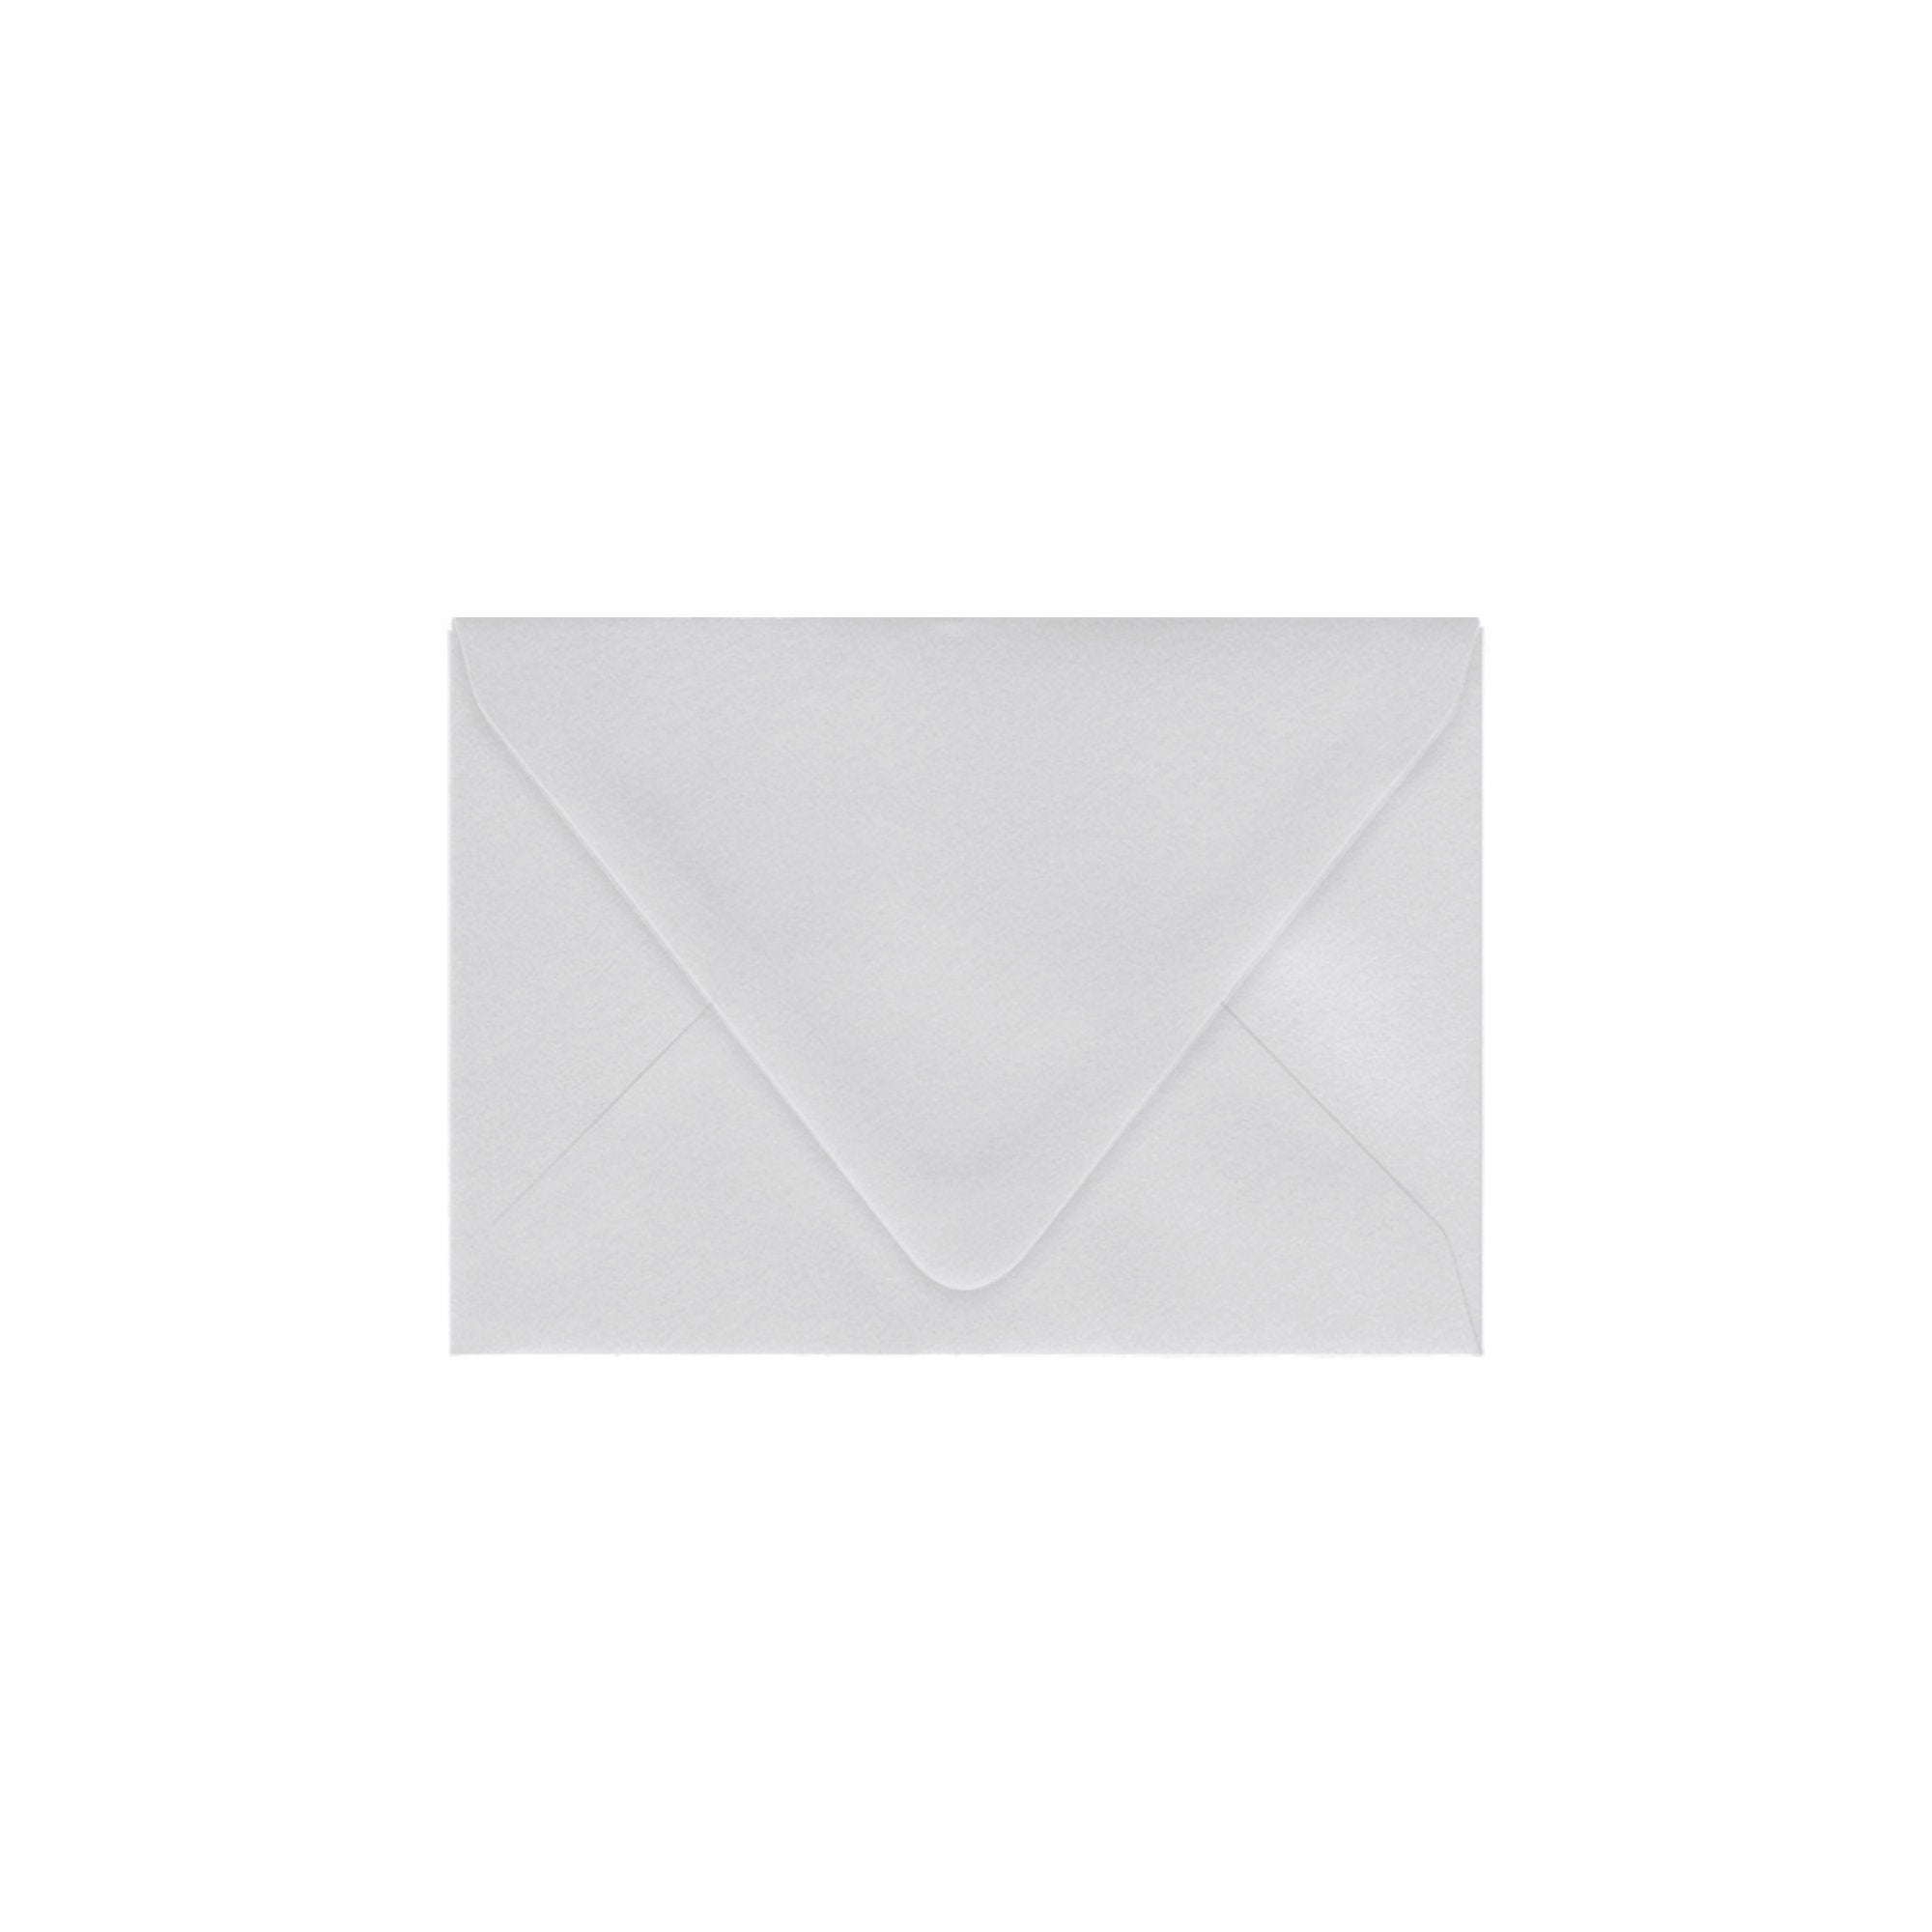 A2 Envelopes